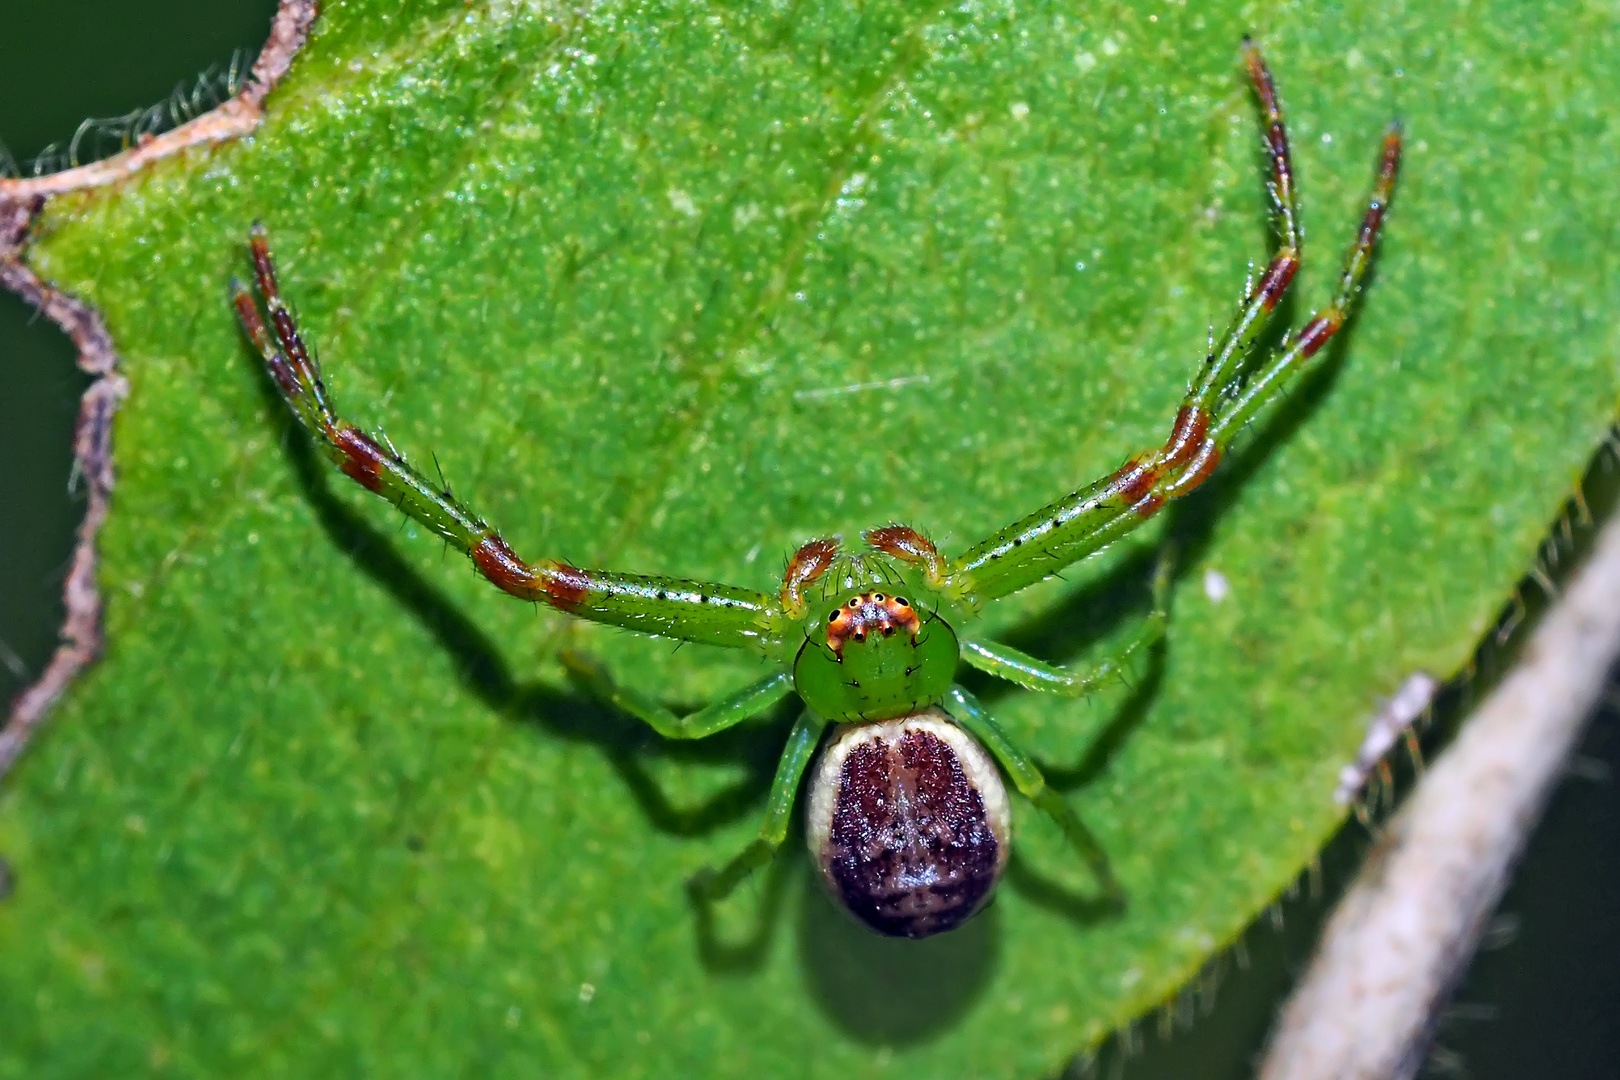 Grüne Krabbenspinne, Männchen (Diaea dorsata) - Araignée crabe minuscule!